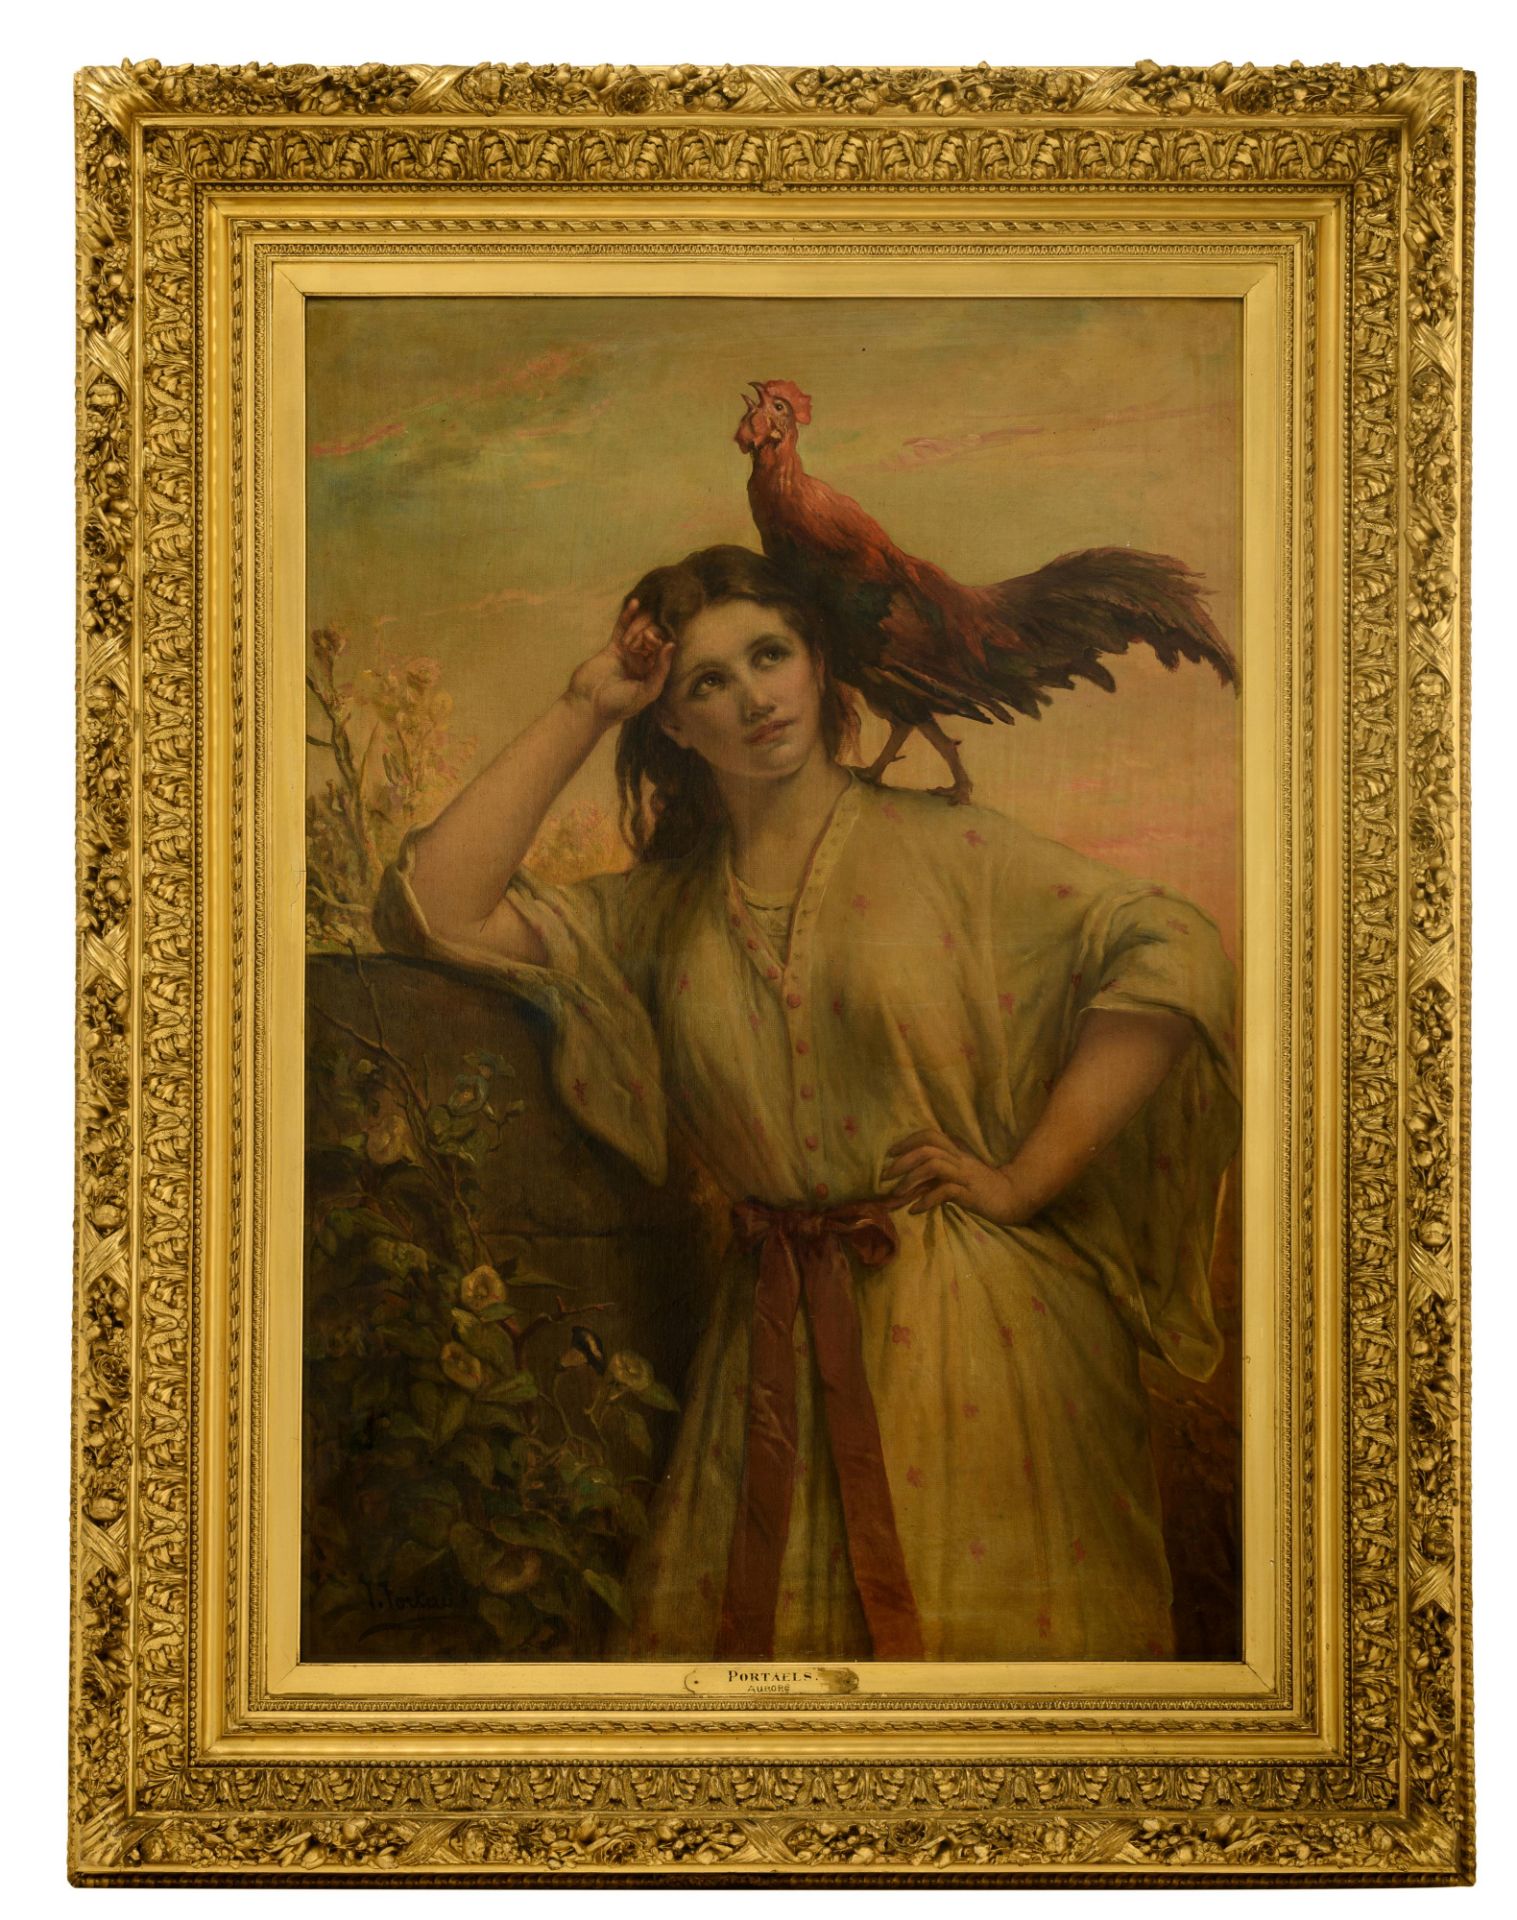 Jan Frans Portaels (1818-1895), 'Aurore', in an imposing frame, 86 x 125 - 122 - 161 cm